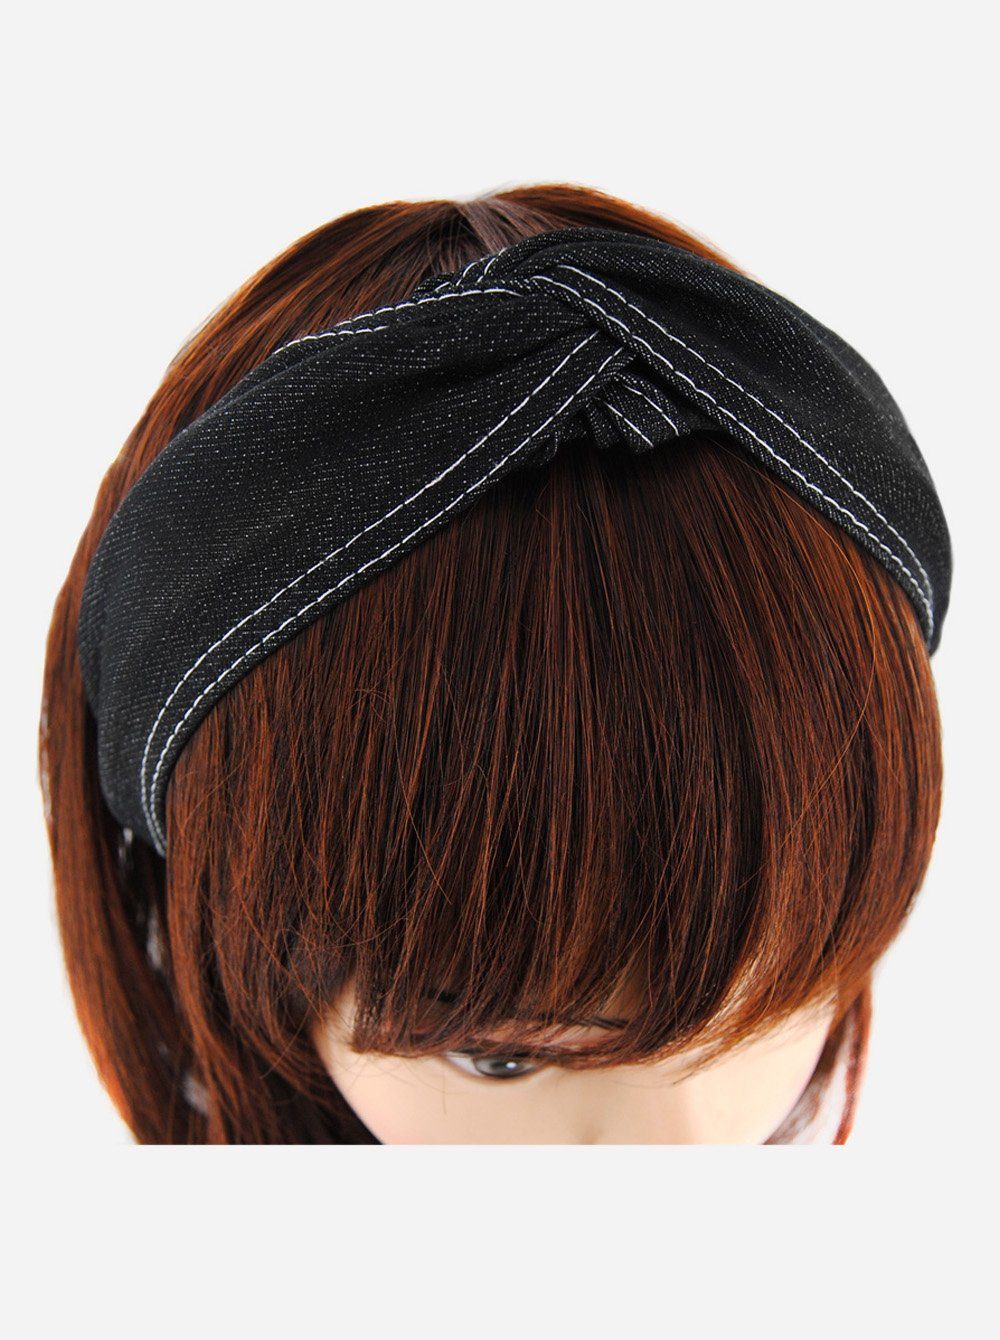 und Vintage Haarreif Haarreif Jeans Damen raffinierten Haareifen axy Stoff, mit Klassik-Look Schwarz Haarband Knoten